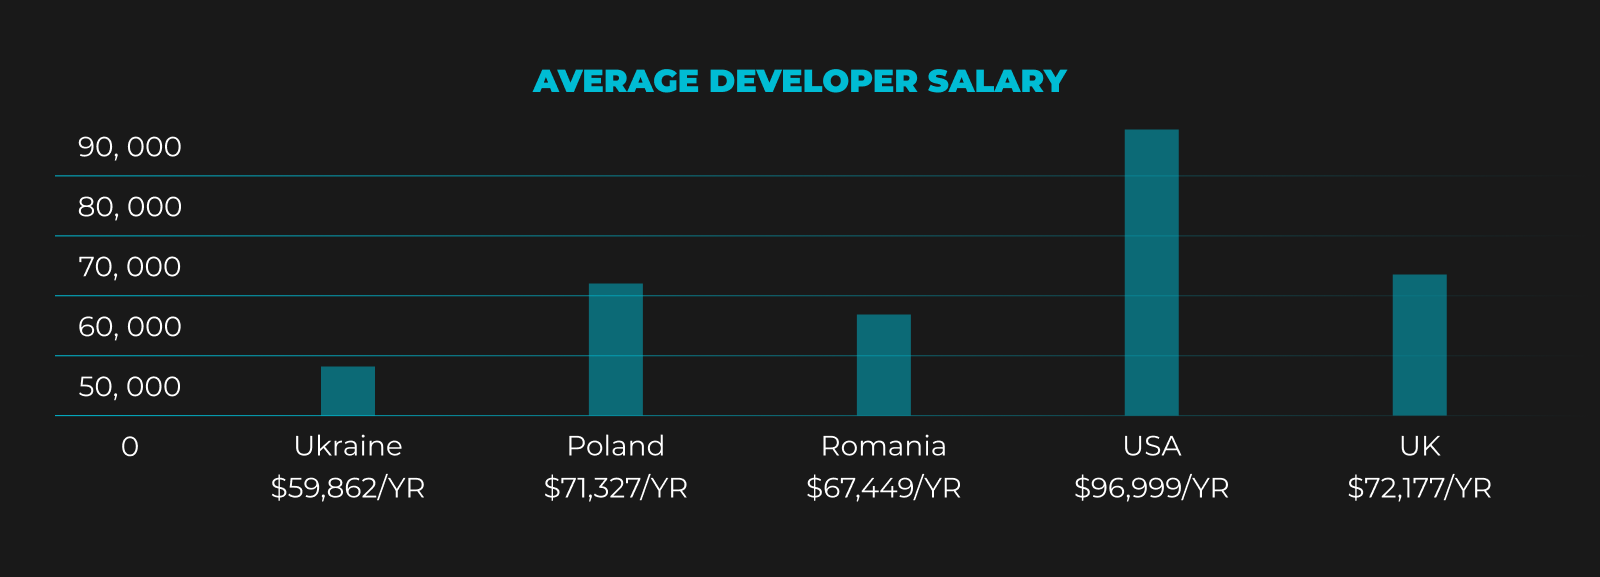 Average salaries